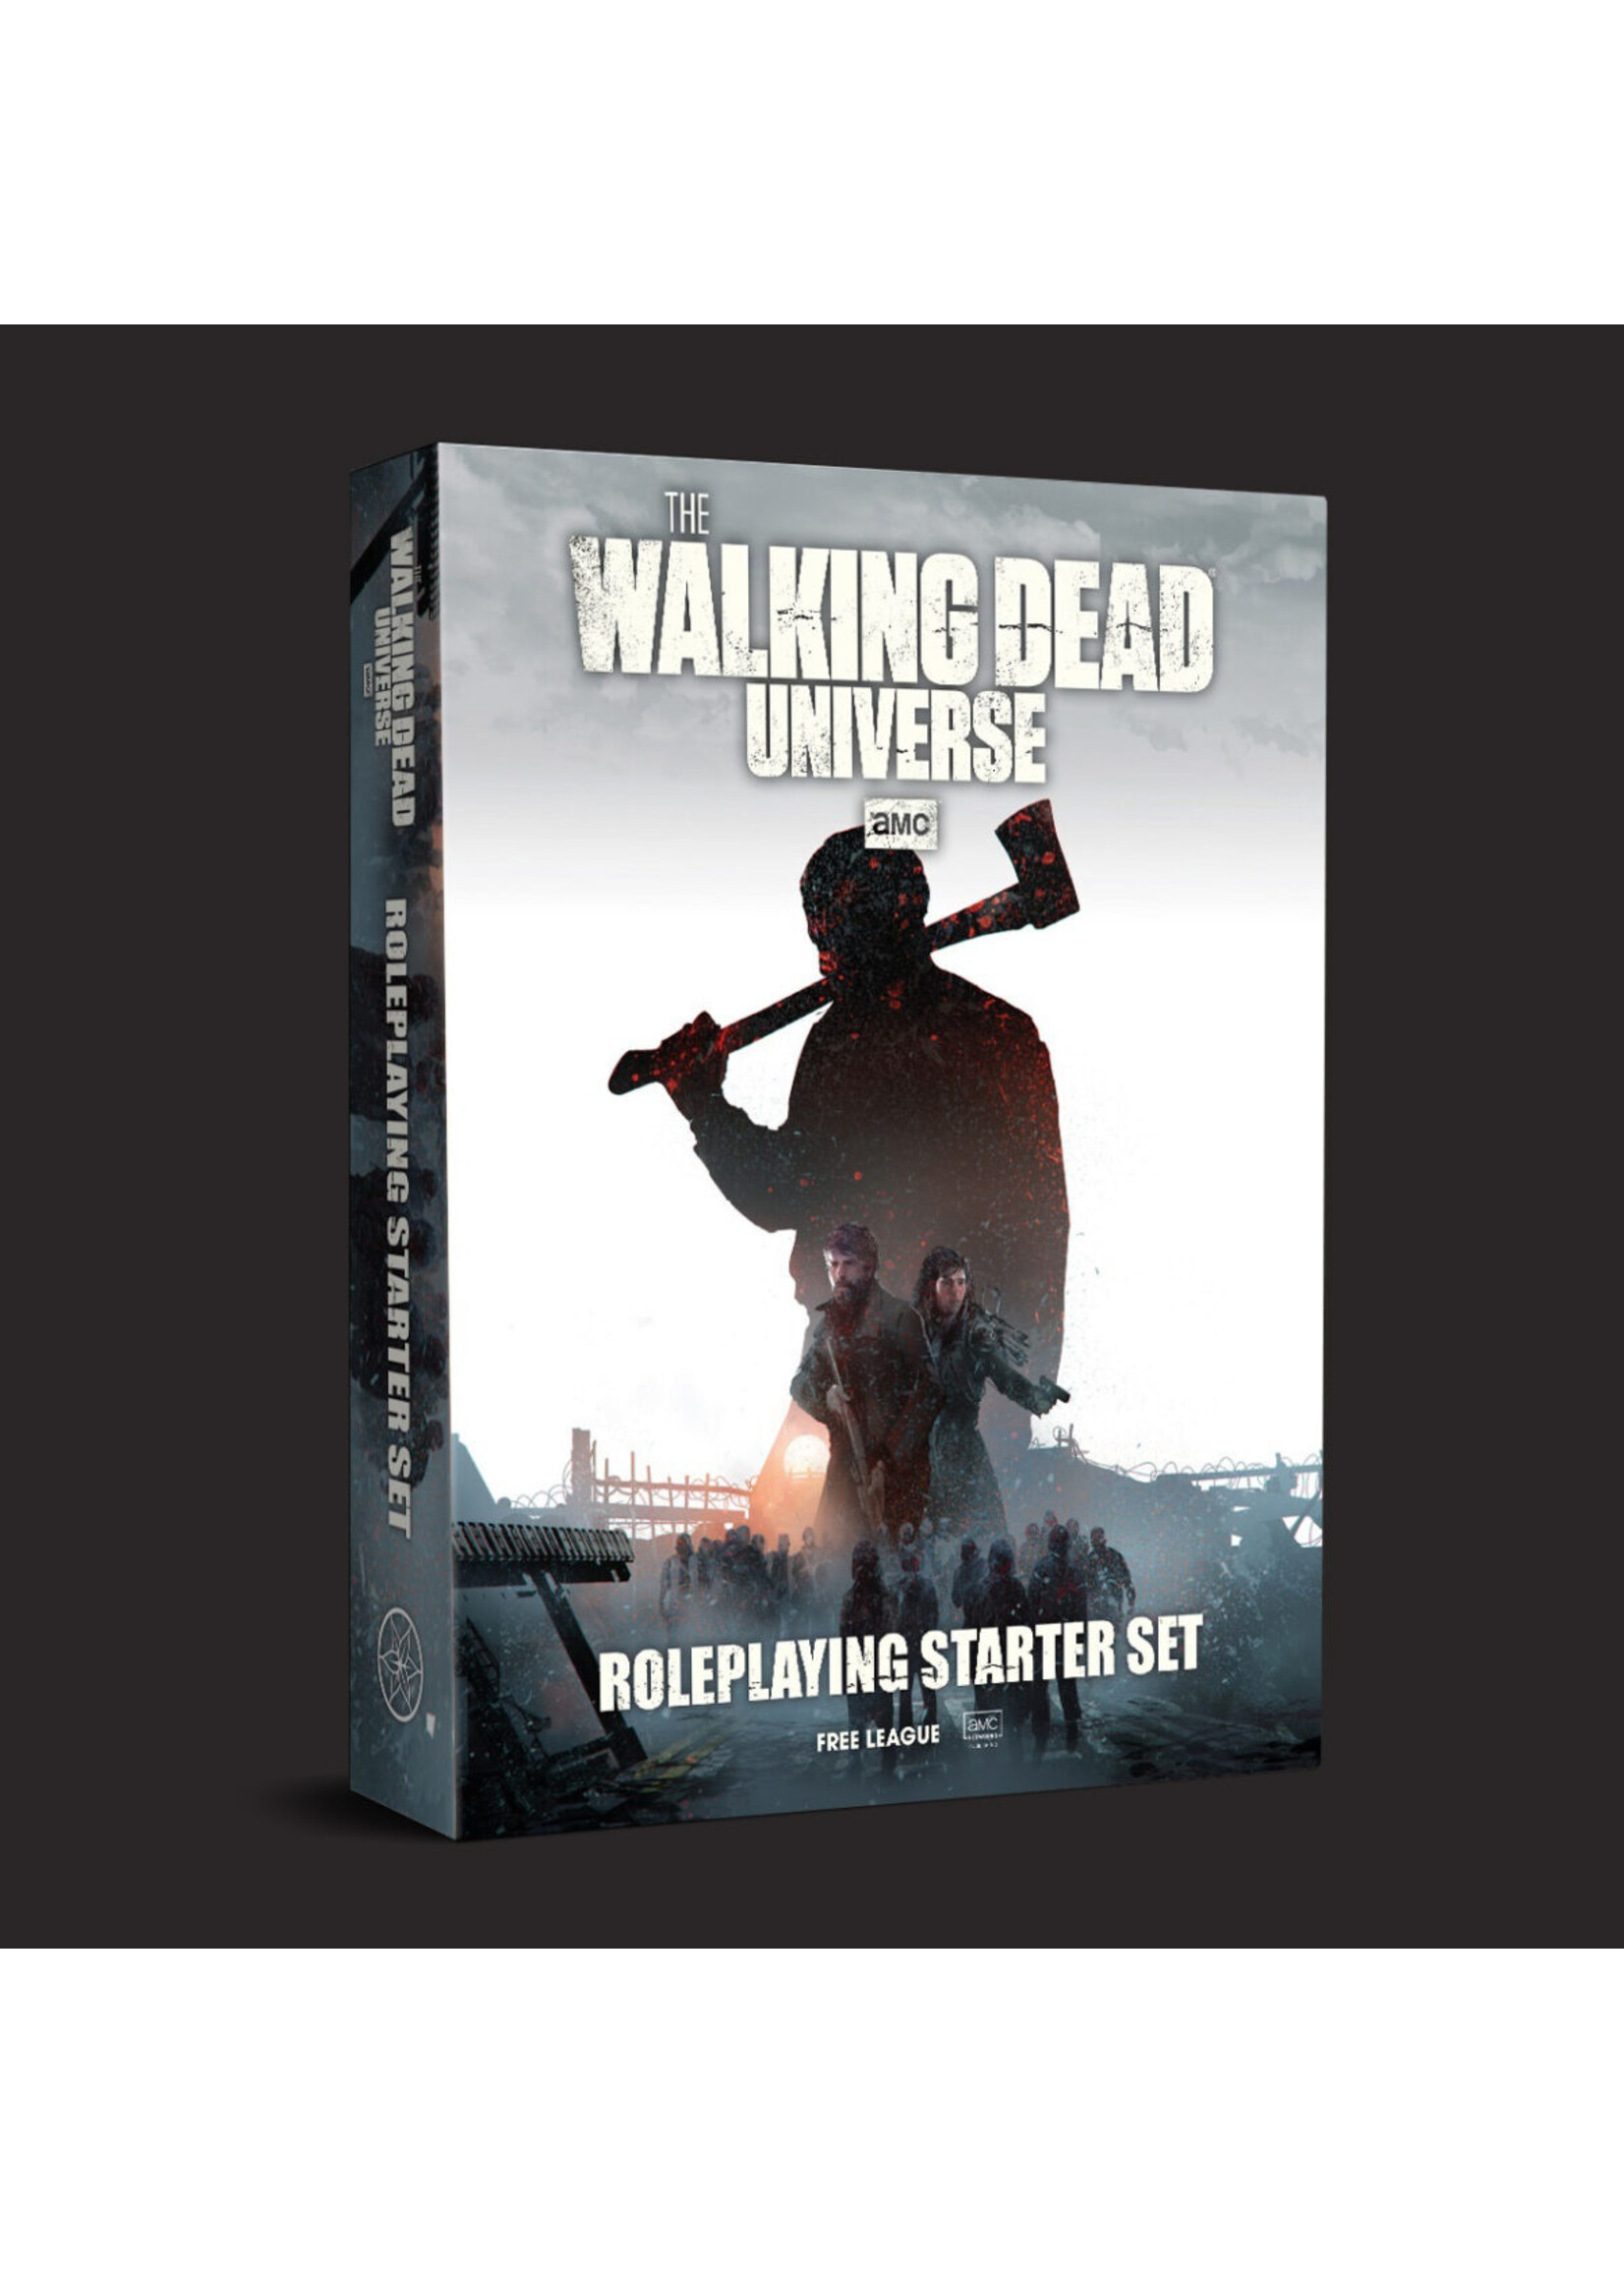 The Walking Dead Universe: RPG Starter Set